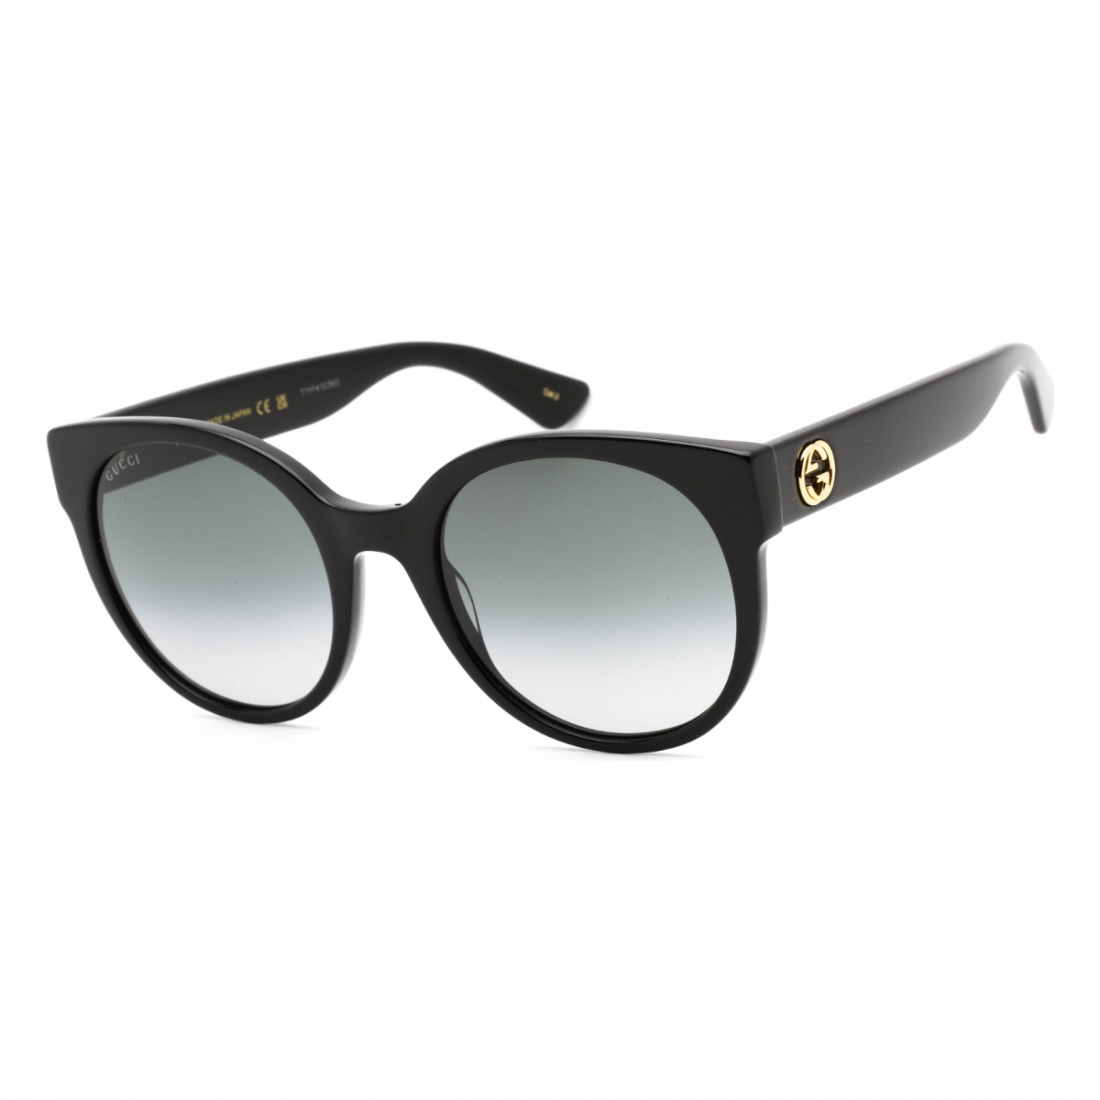 Women's 'GG0035SN' Sunglasses